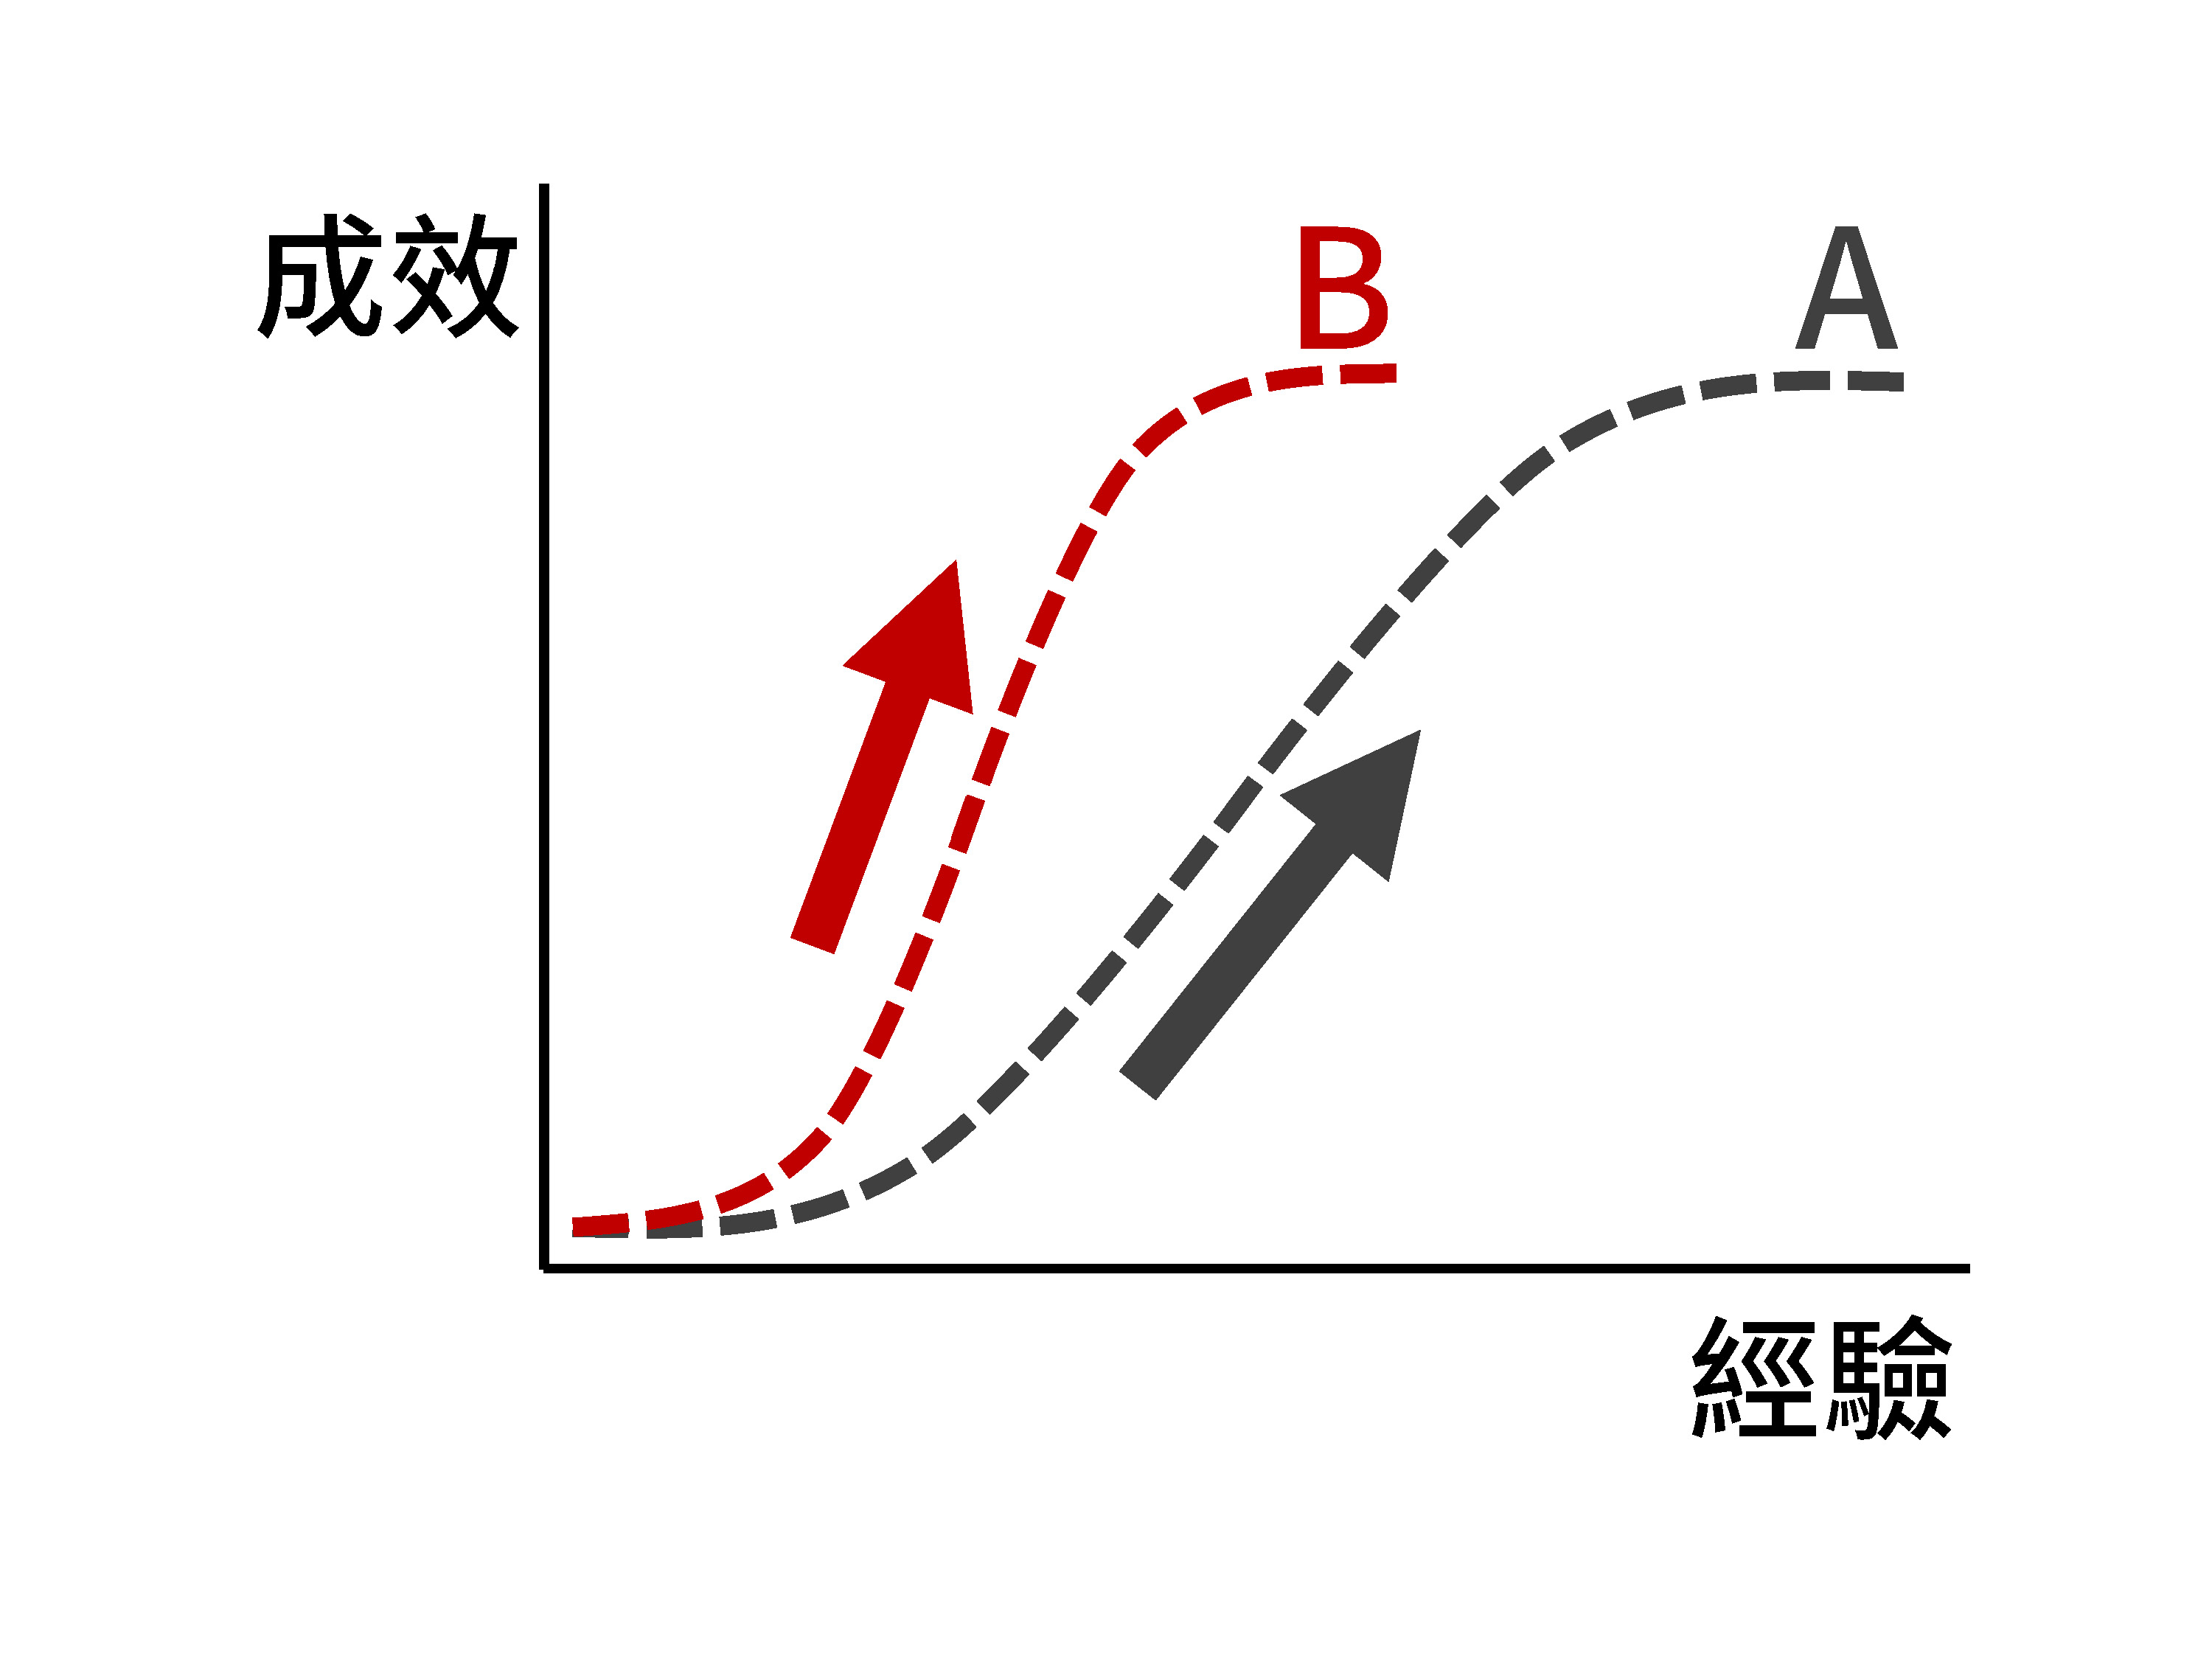 Fig. 3 - 縮短距離的第二個方式，就是「用對的方法學」。如紅色 B 曲線，雖然起點相同，但因為方法有效，斜率大，所以也能較快達到理想表現。